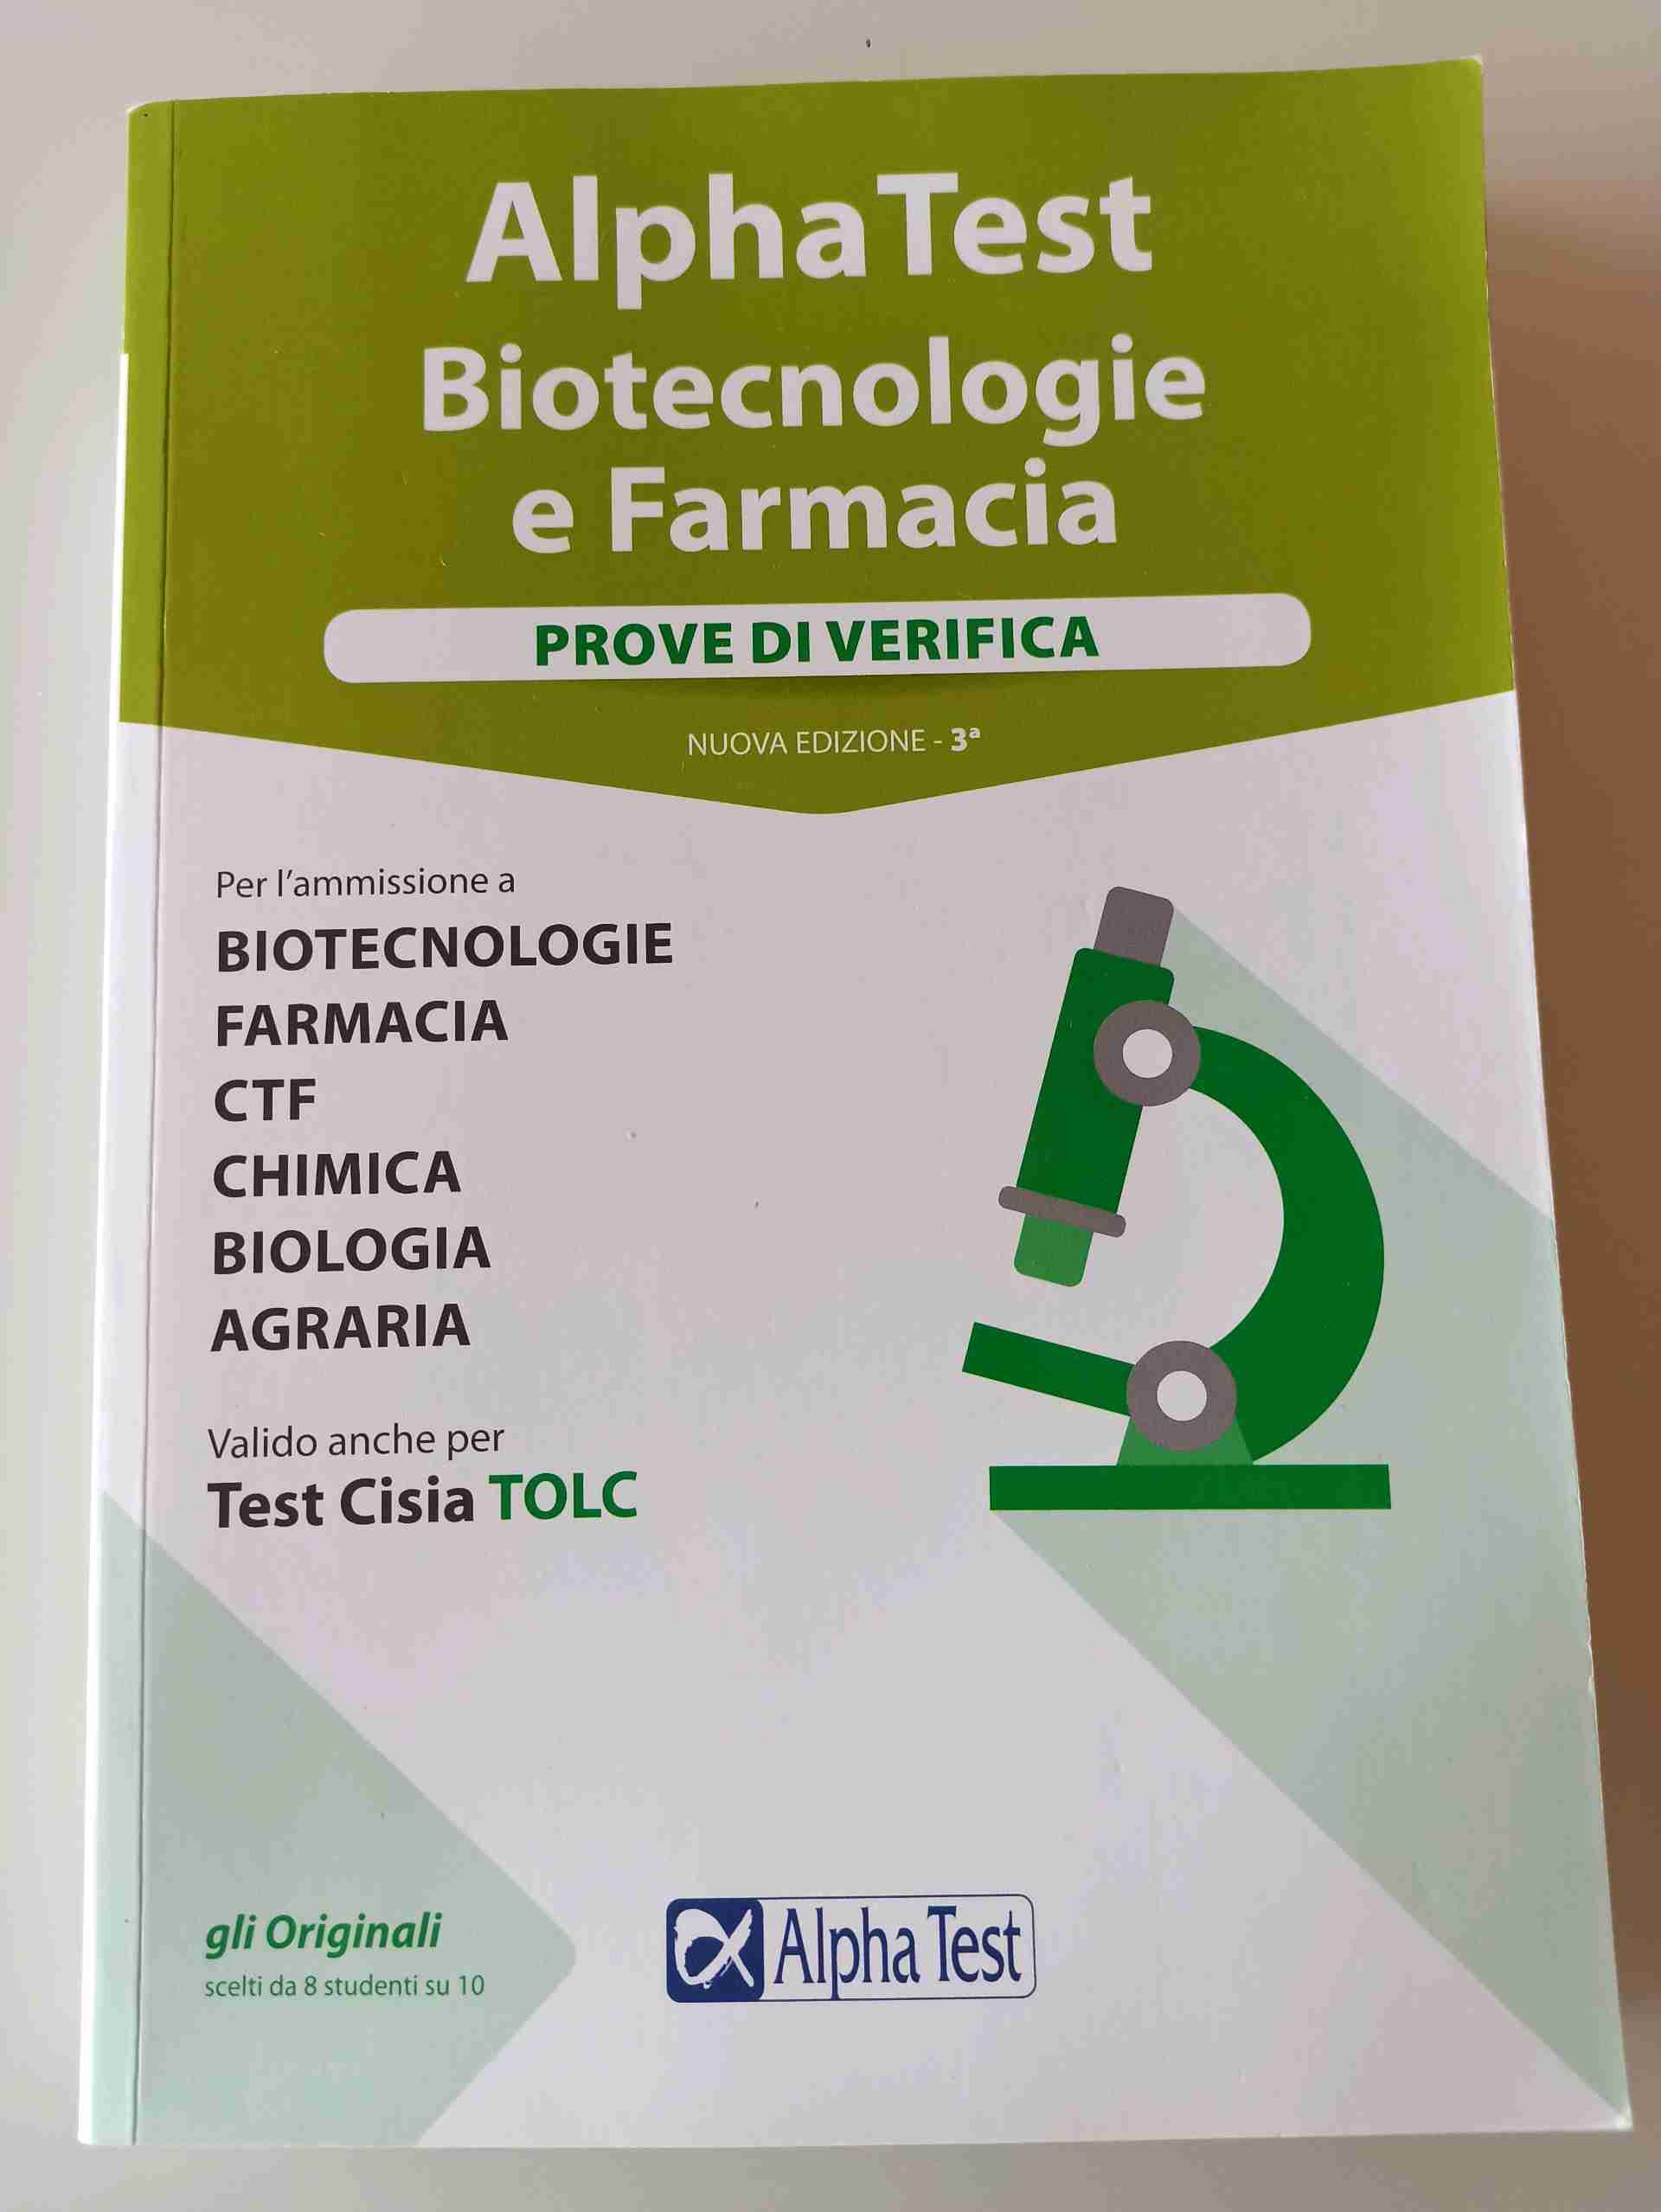 Alpha Test Biotecnologie e Farmacia - prove di verifica